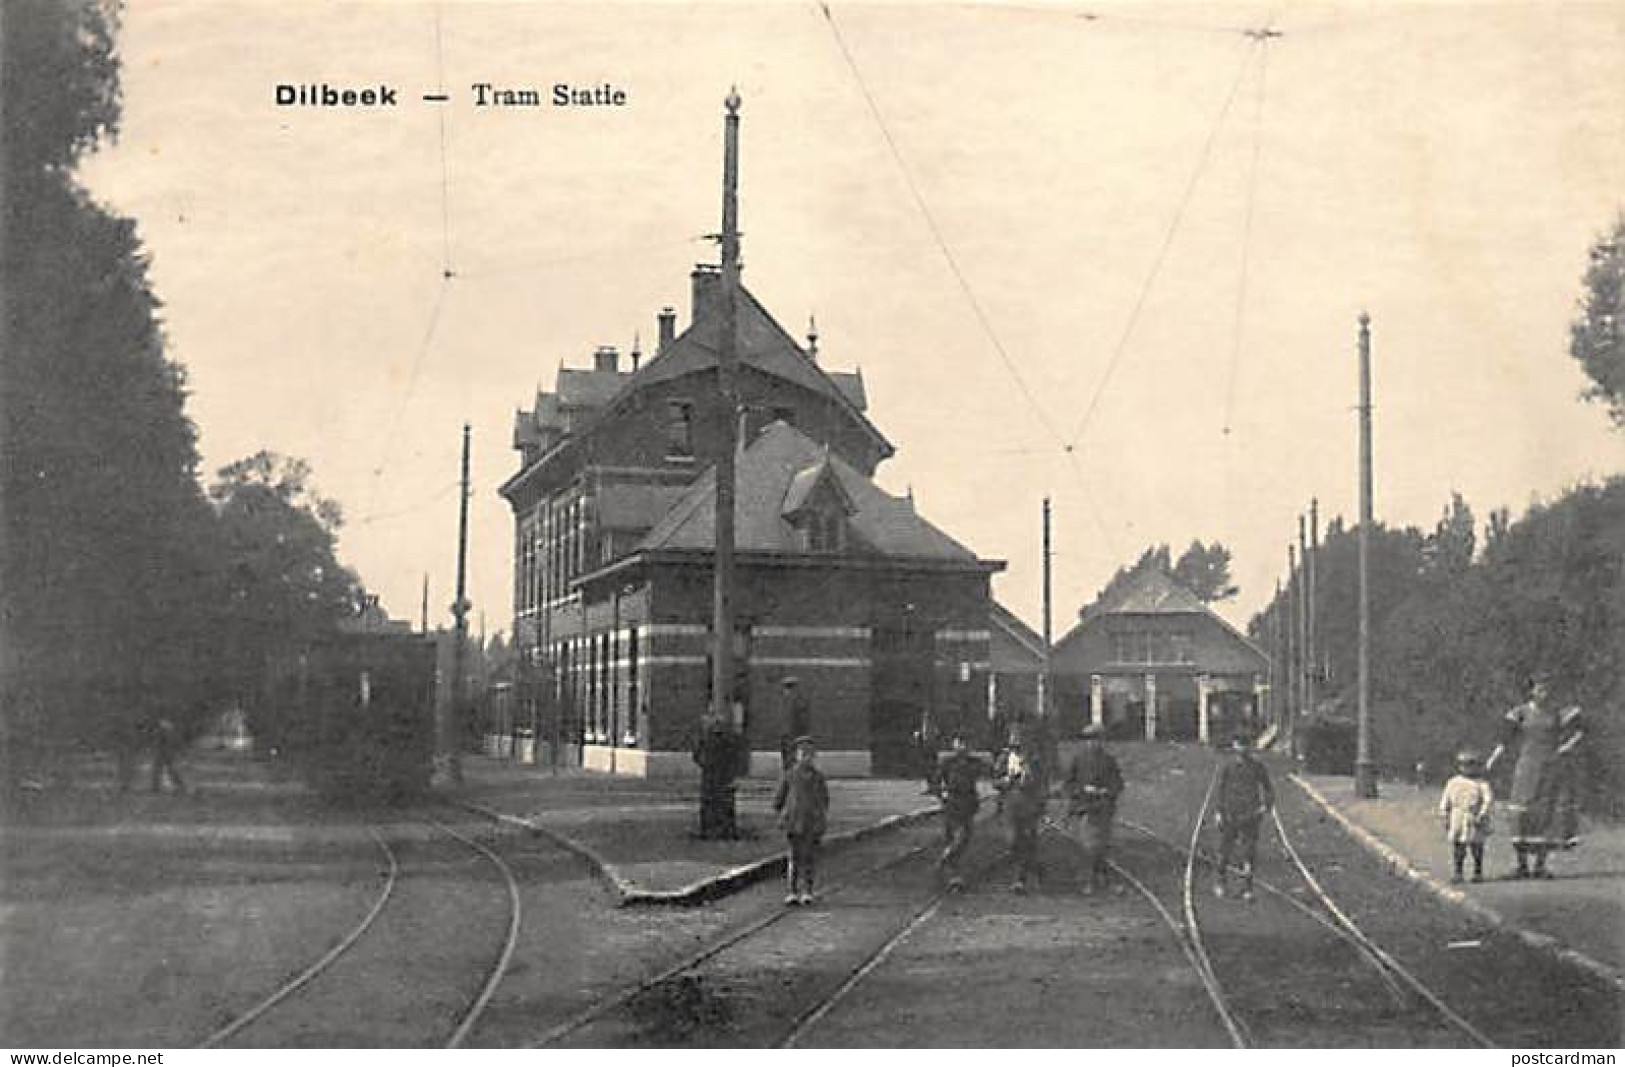 DILBEEK (Vl. Br.) - Tram Statie - Streetcar Tramway Station - Ed. De Scrijver-Plas. - Dilbeek